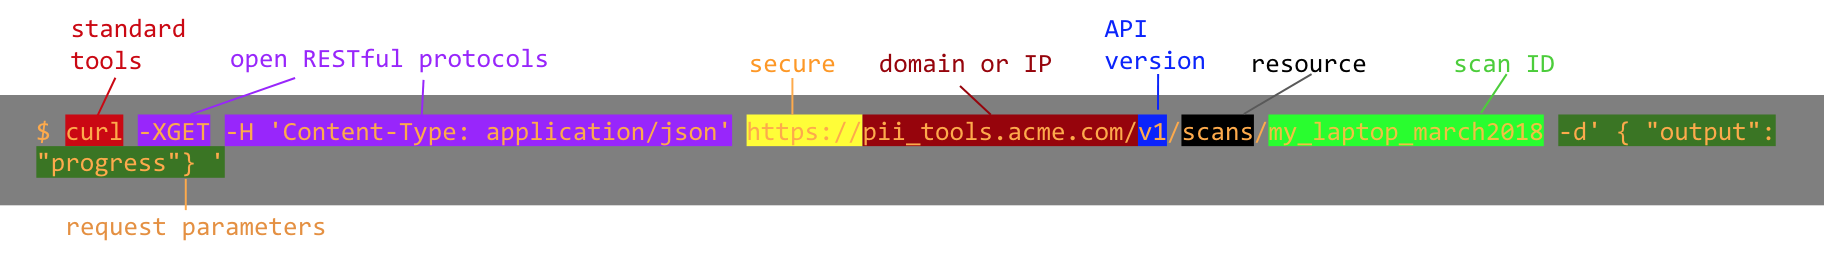 API URL structure